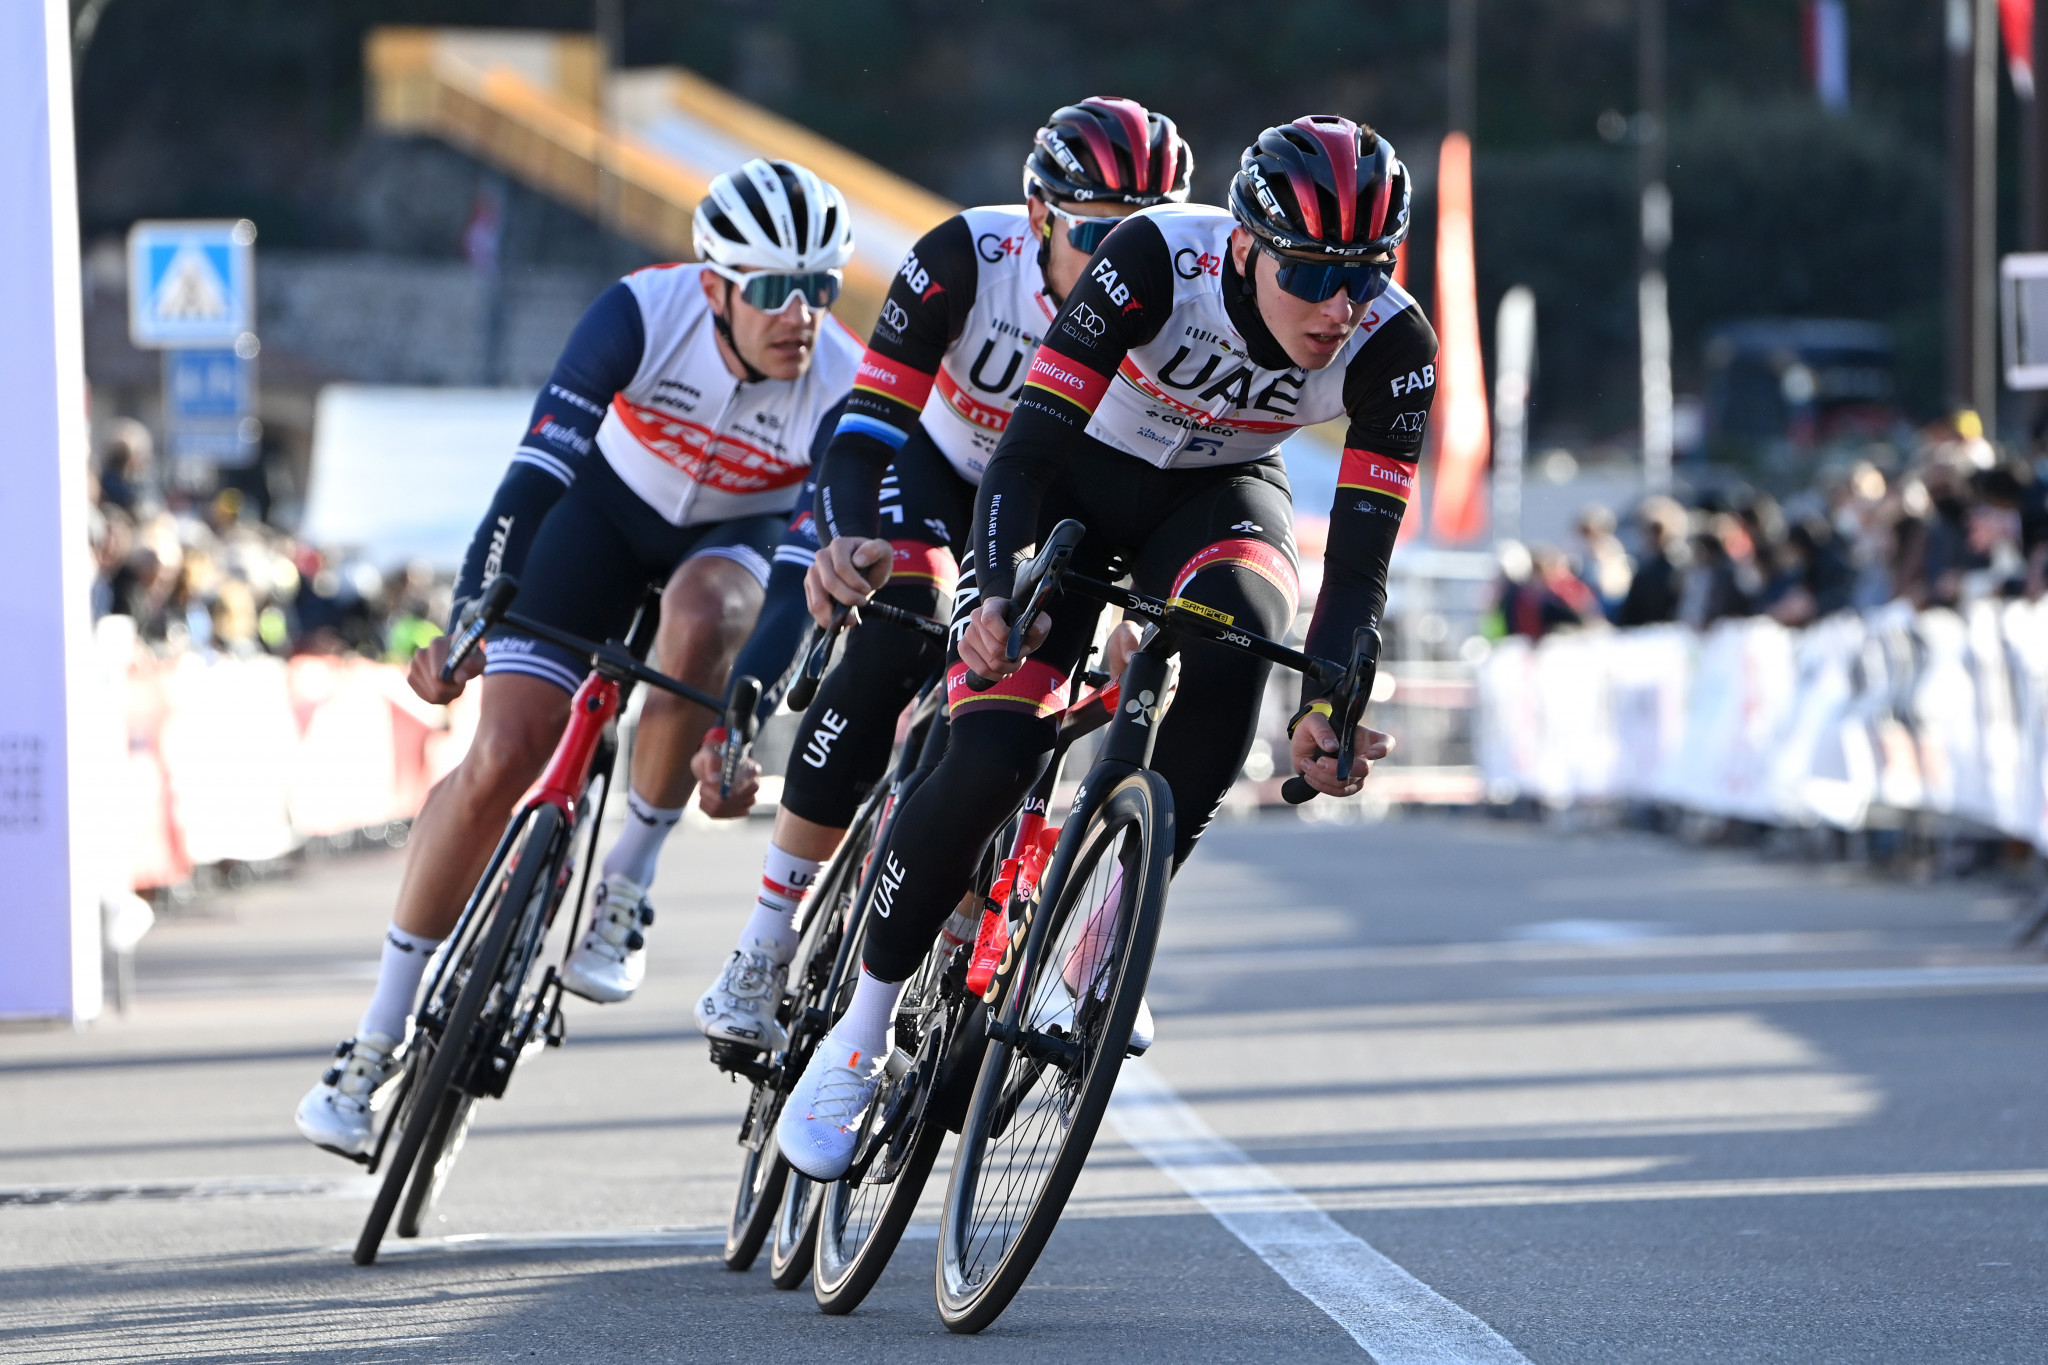 Pogačar wins fourth stage of Tirreno-Adriatico and takes race lead